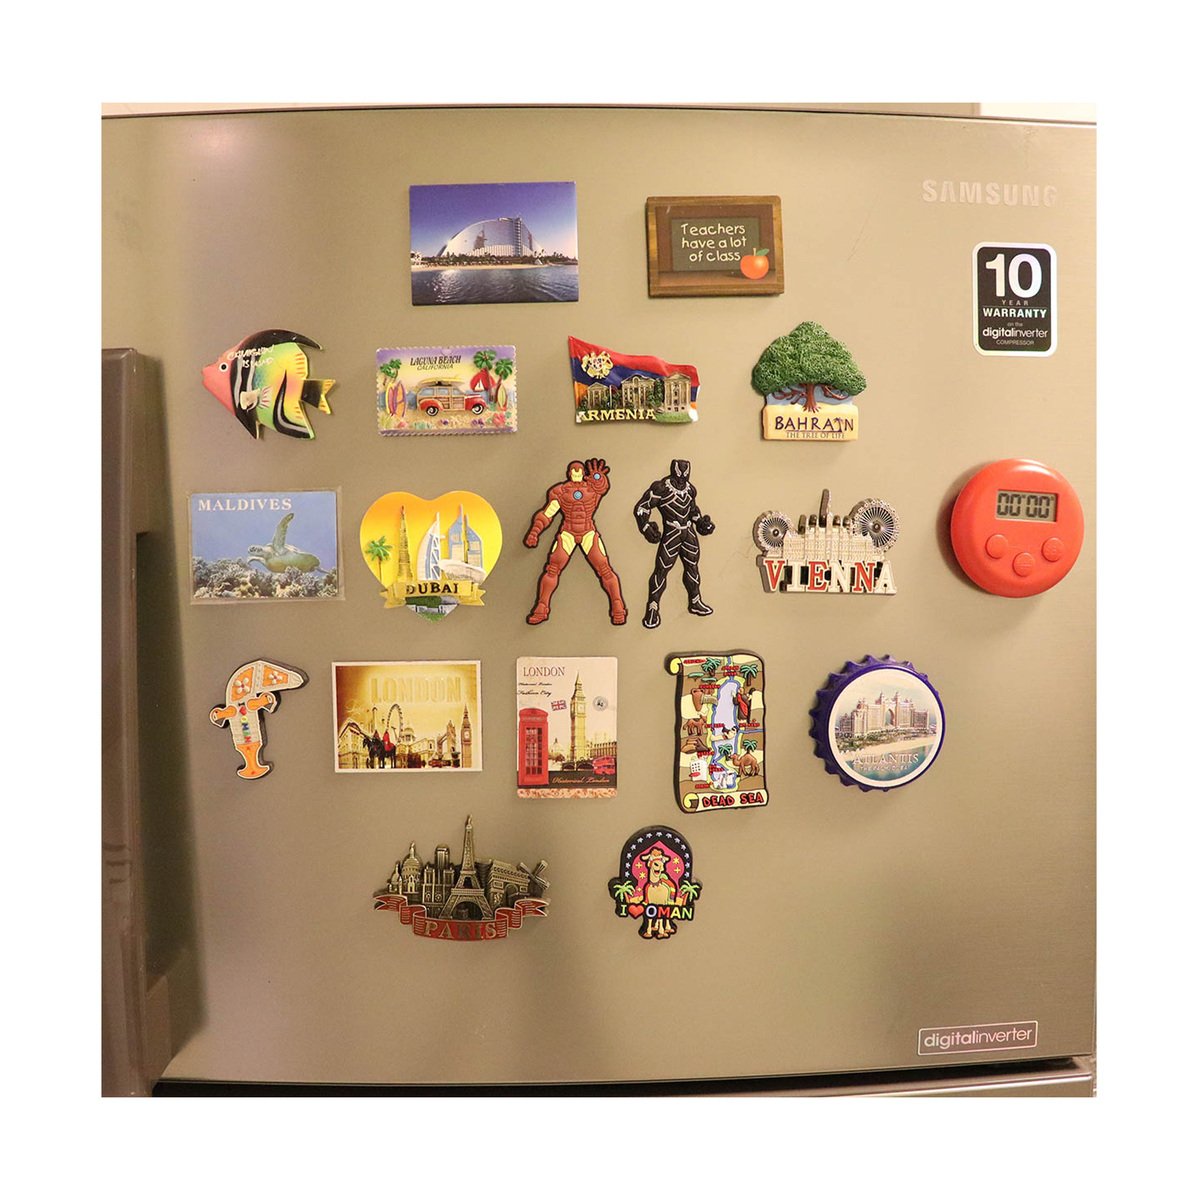 Marvel Ironman Soft Fridge Refrigerator Magnet TRHA2244